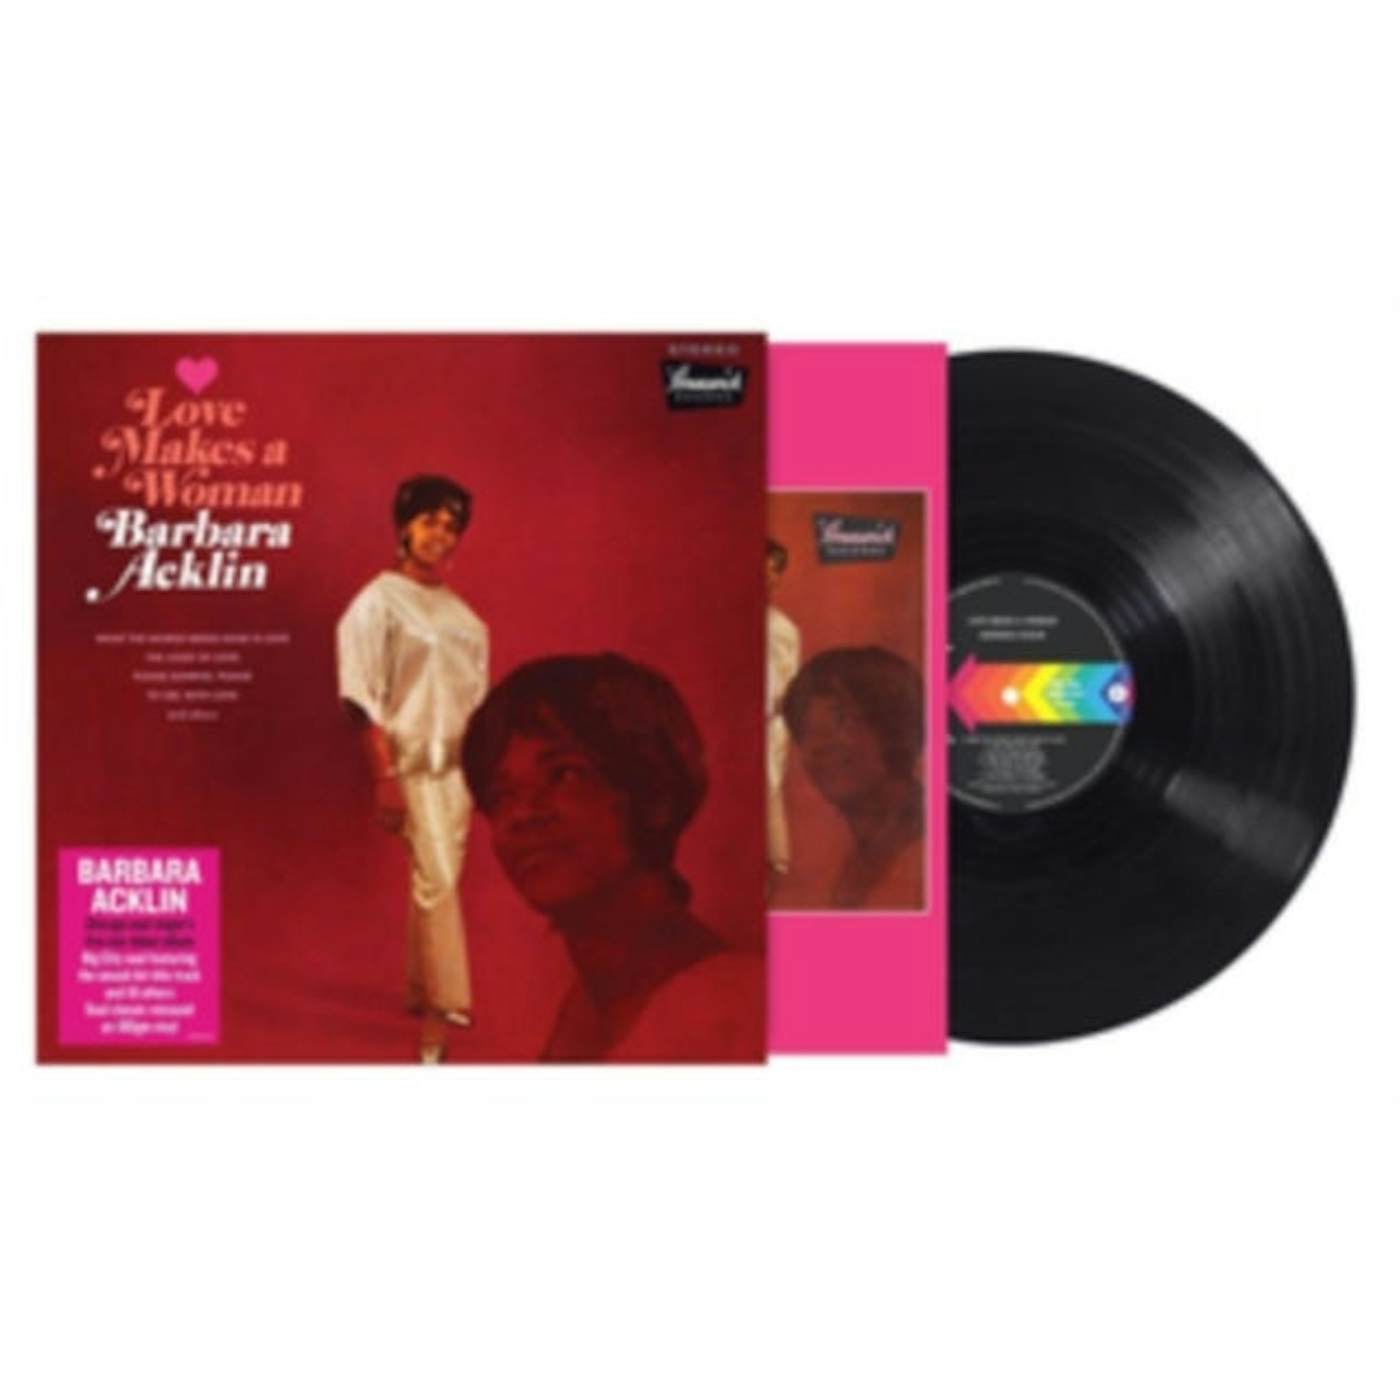 Barbara Acklin LP Vinyl Record - Love Makes A Woman